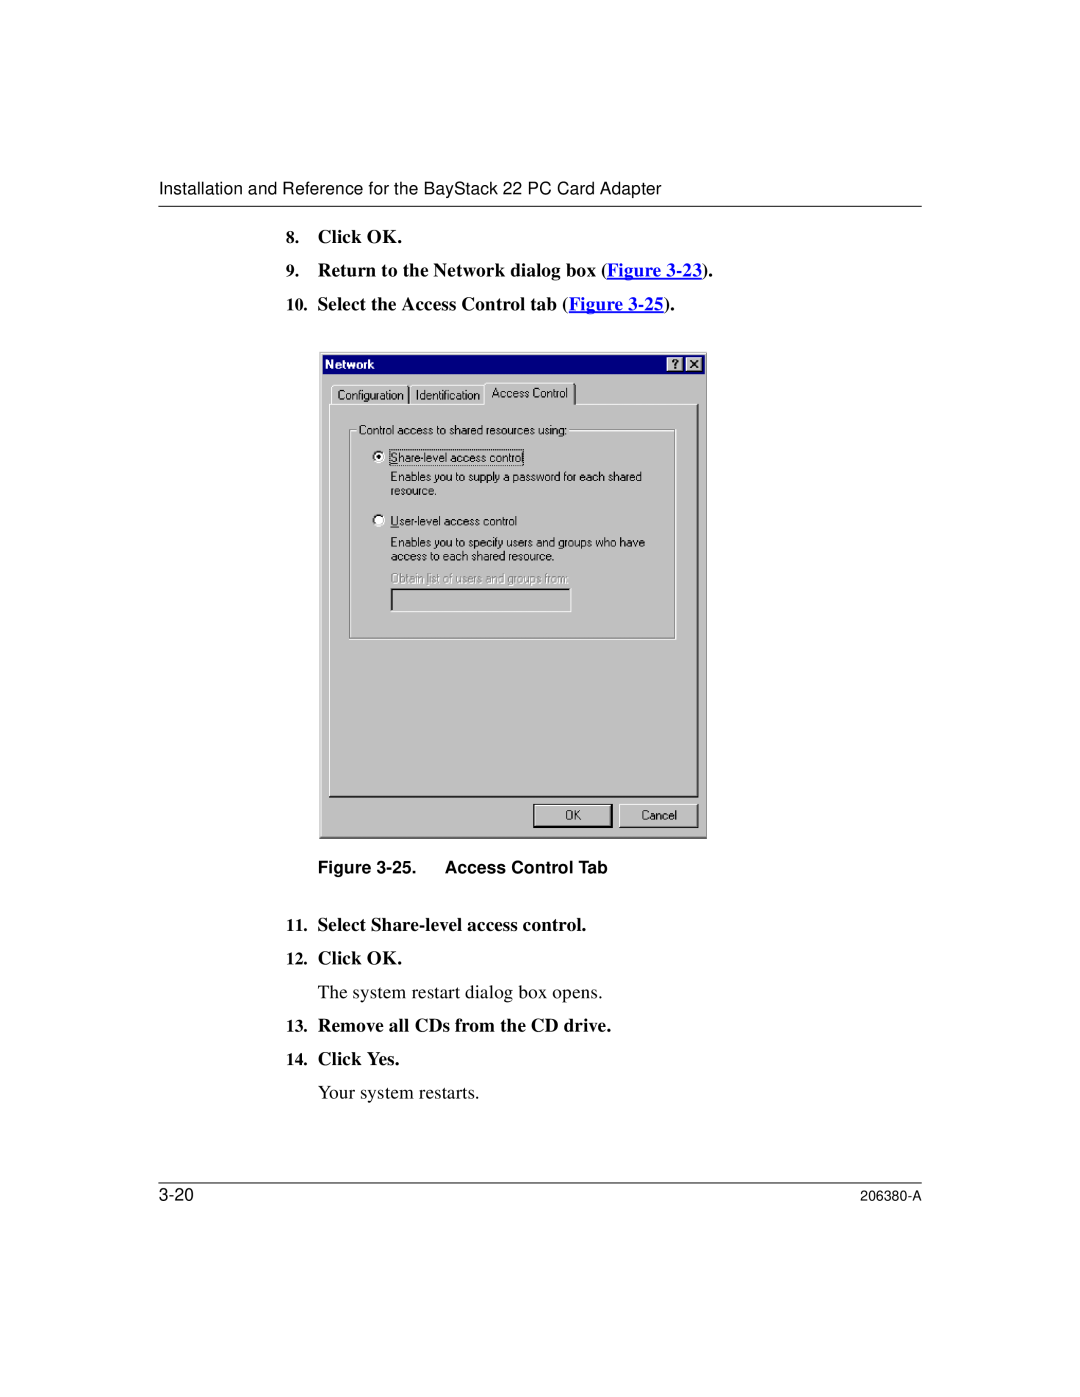 3Com 206380-A manual Click OK, Return to the Network dialog box Figure, Select the Access Control tab Figure, 3-20 